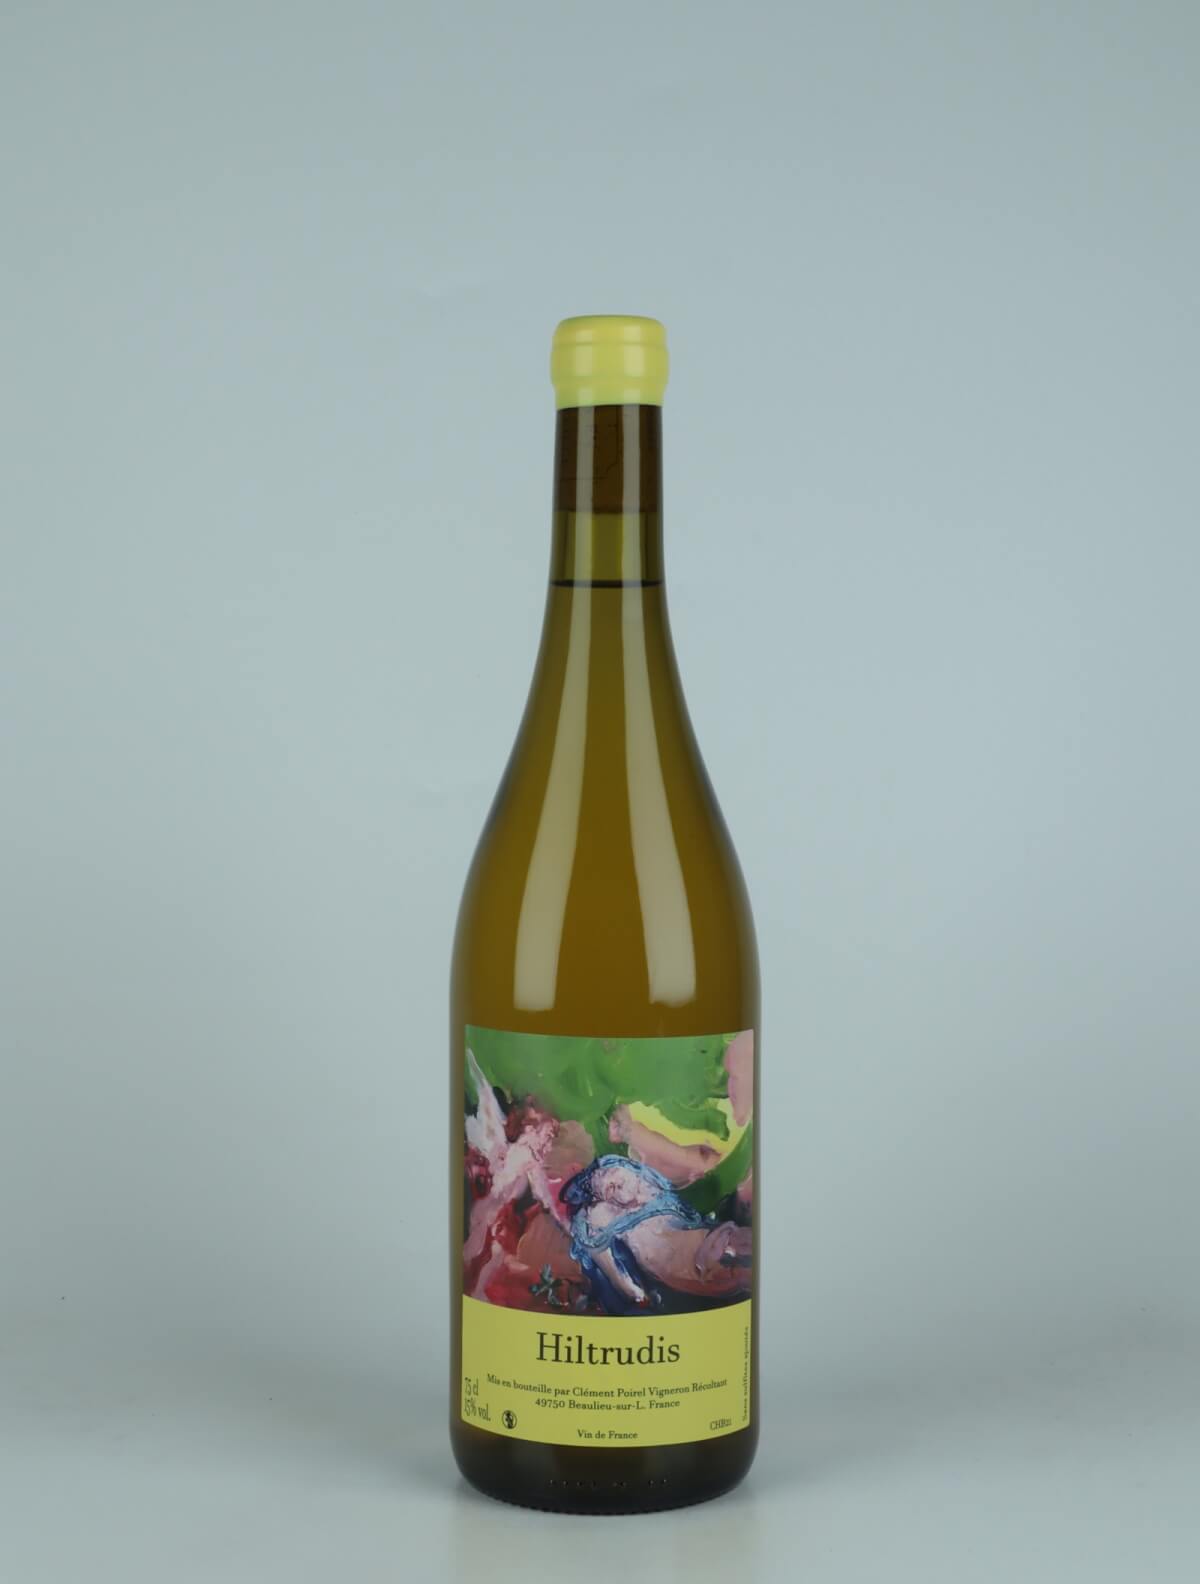 A bottle 2021 Hiltrudis White wine from Clément Poirel, Loire in France